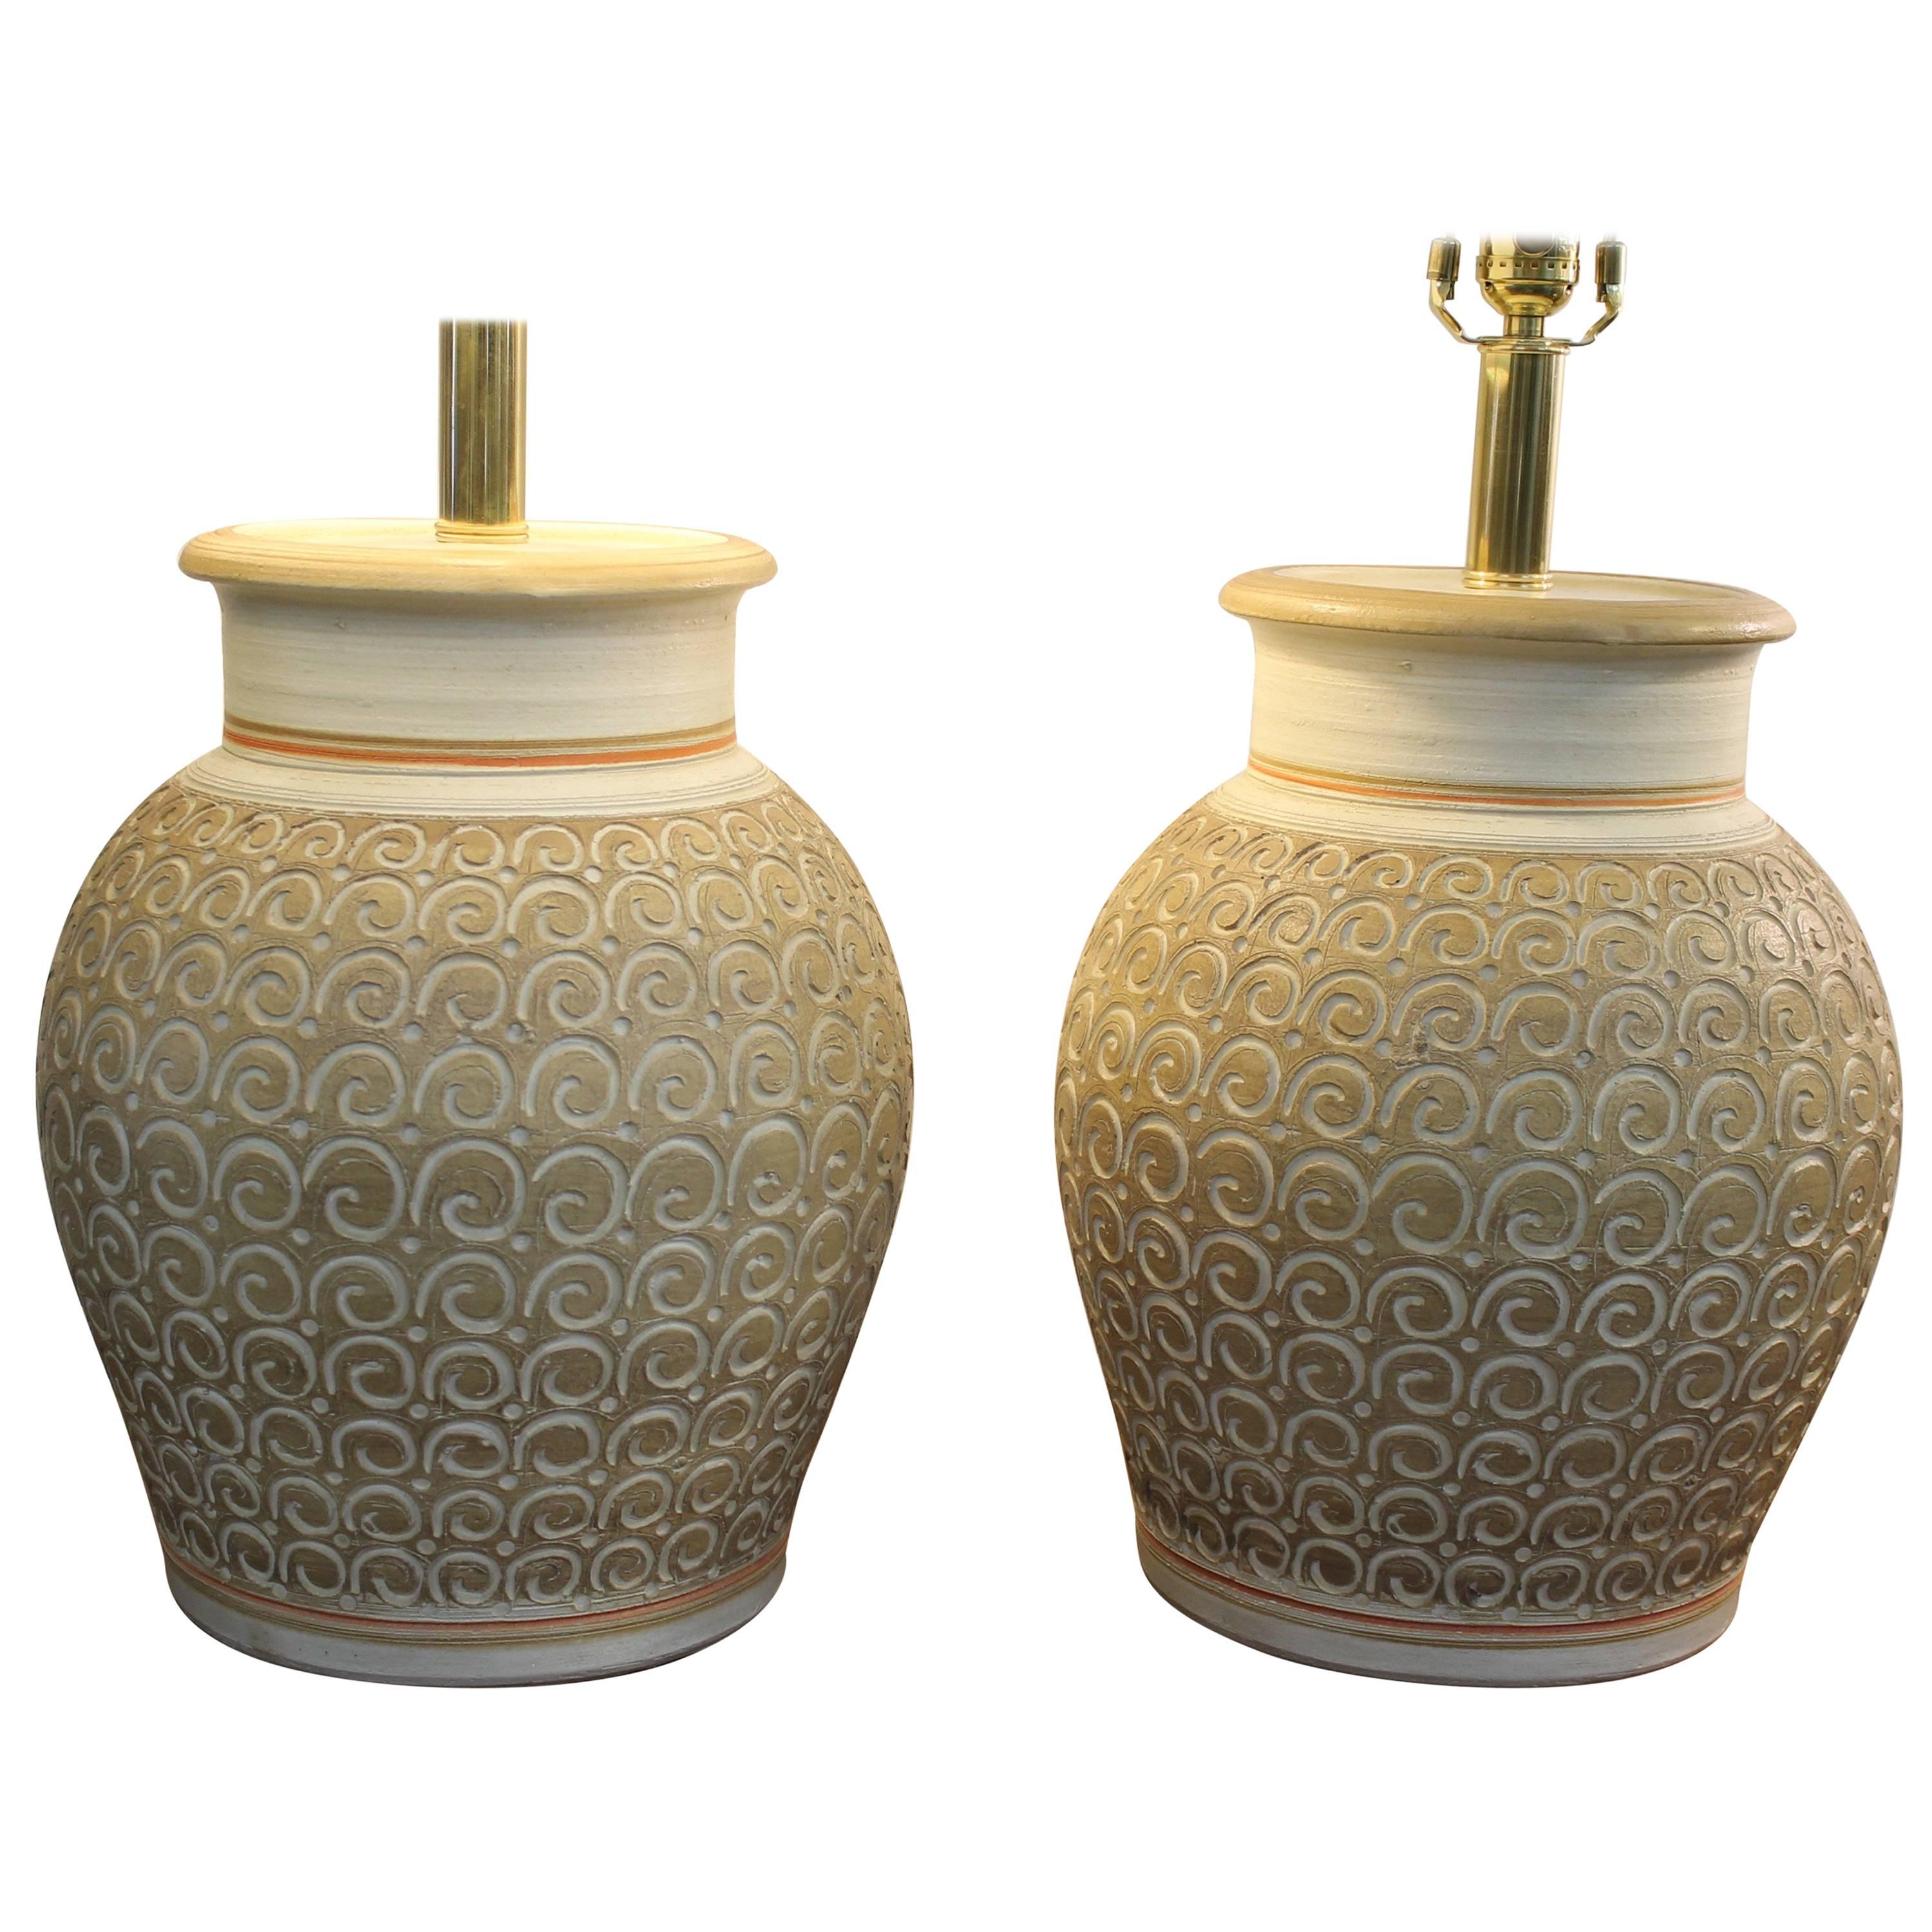 Pair of Ceramic Lamps by Casual Lamps of California